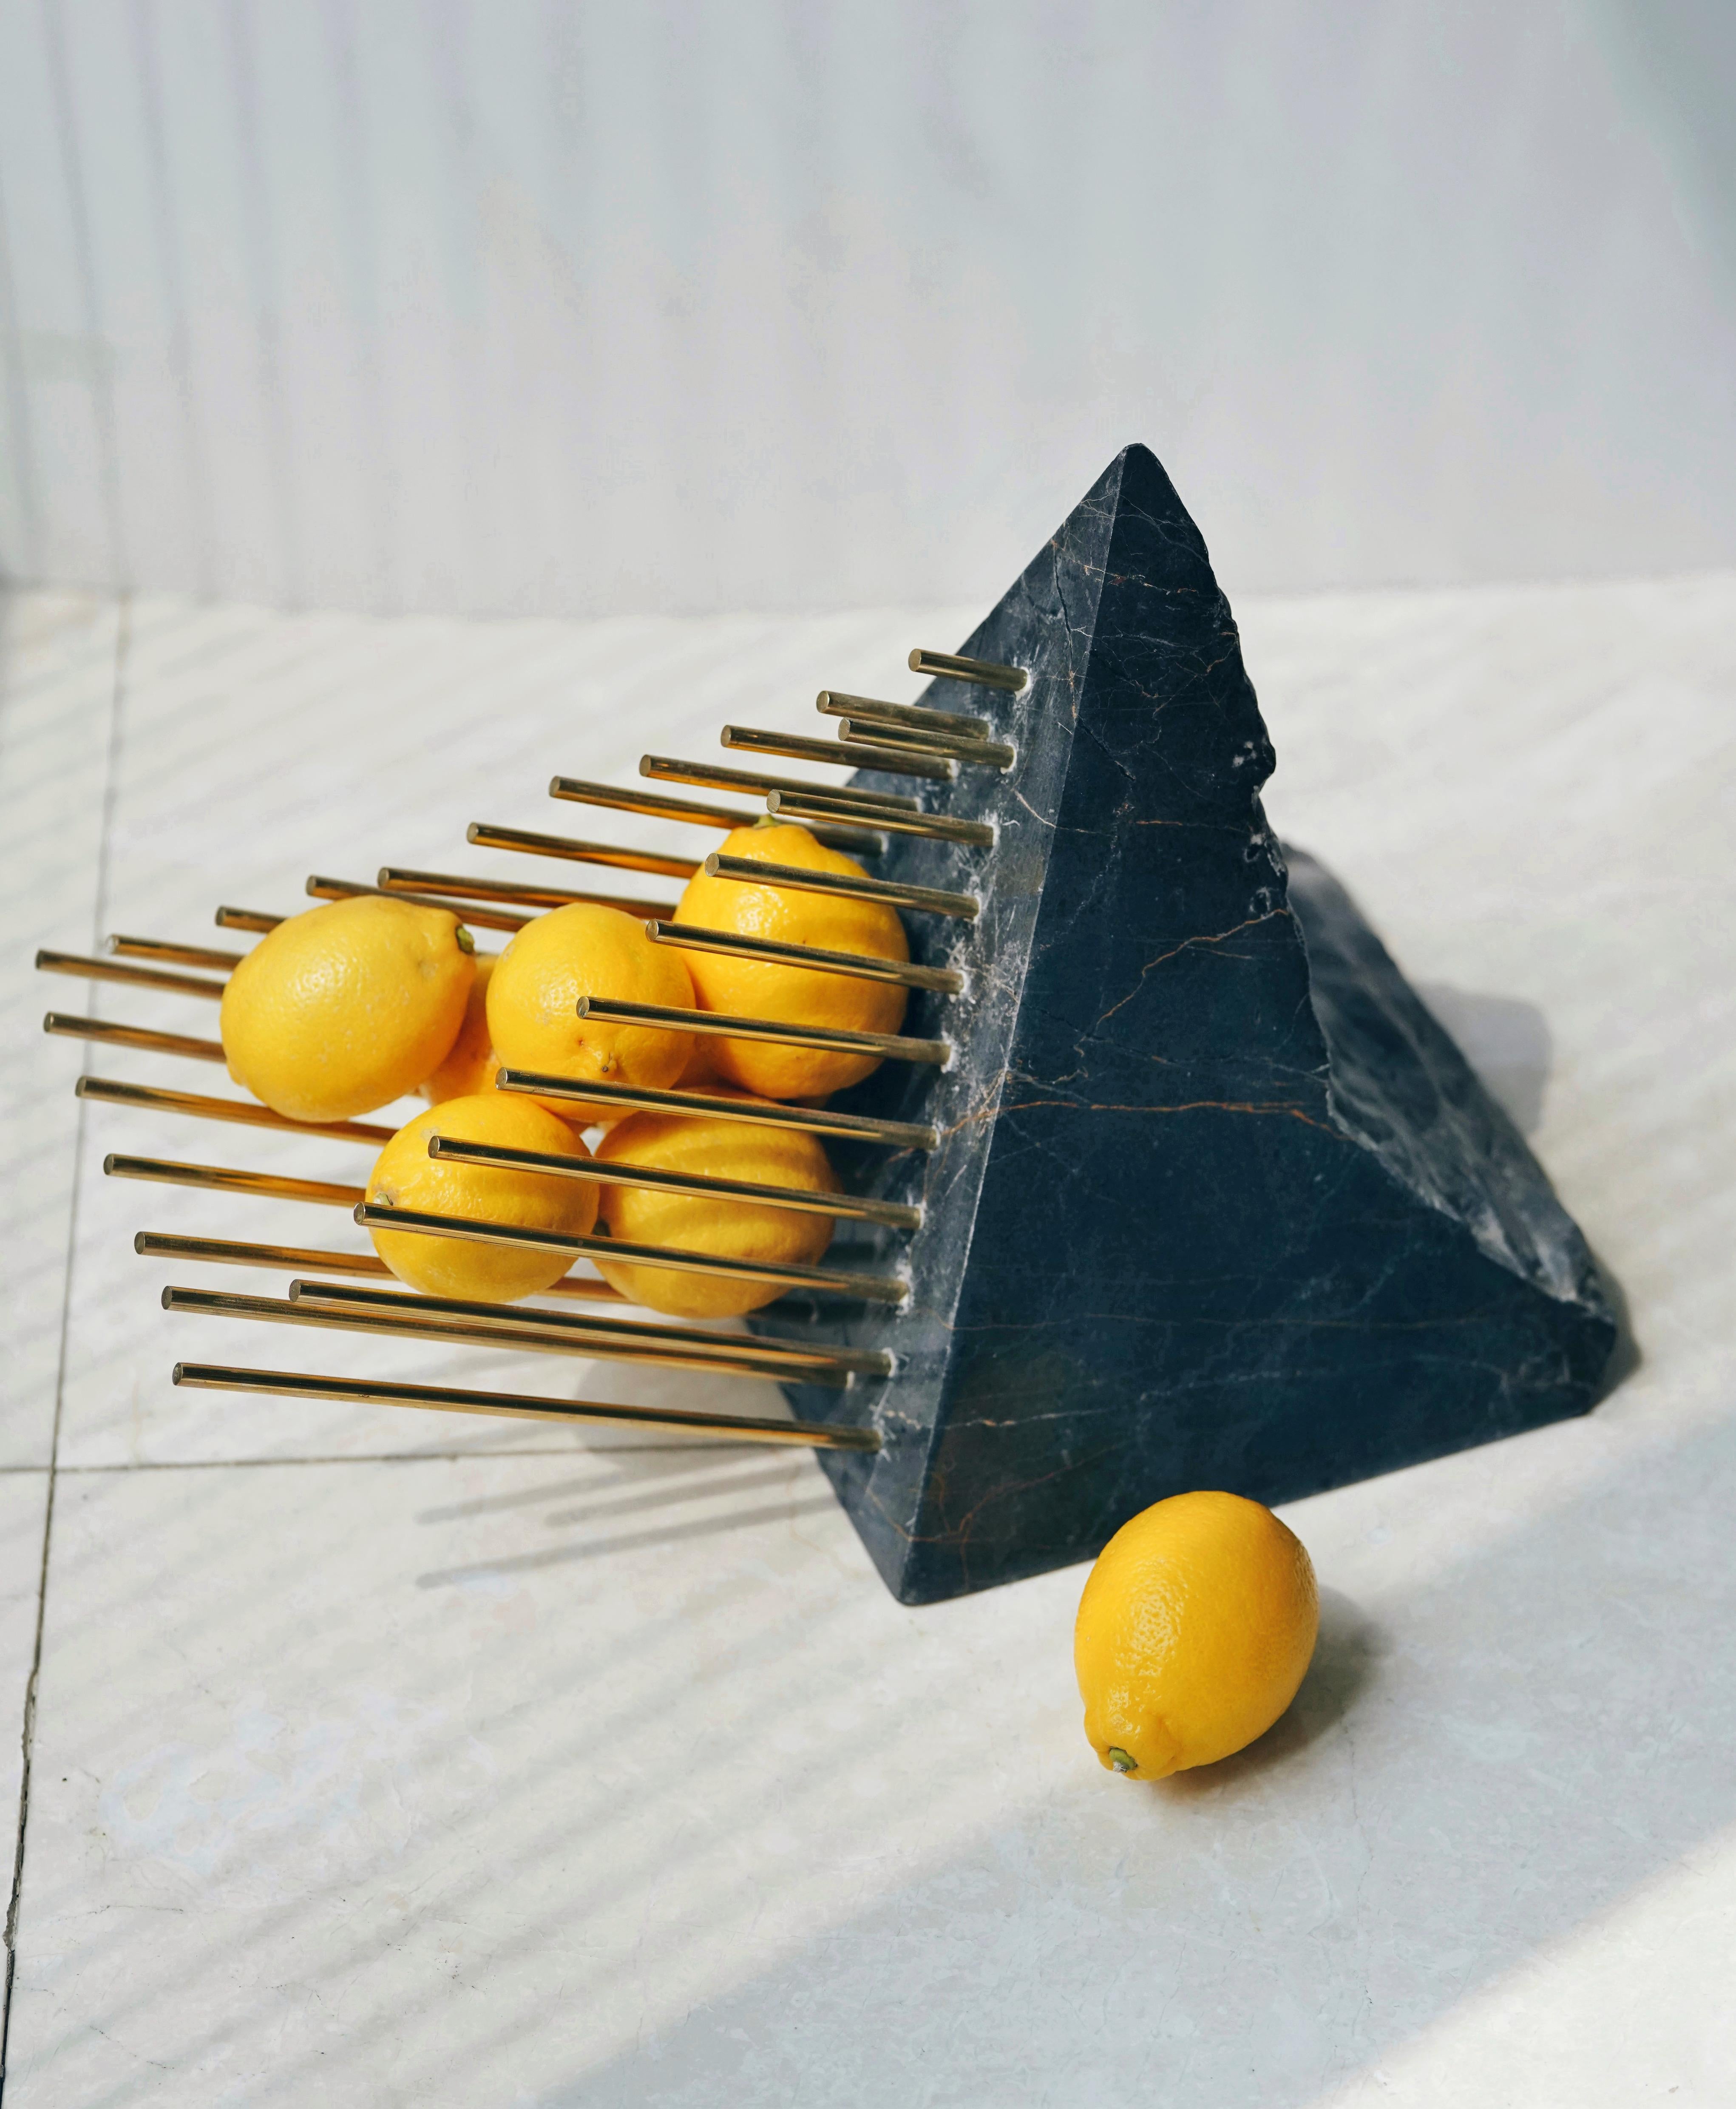 Jari fruit bowl by Elham Nejati
Dimensions: Ø 36 x H 28 cm.
Materials: Black marble, white marble, stainless steel, brass. 

Elham Nejati:
